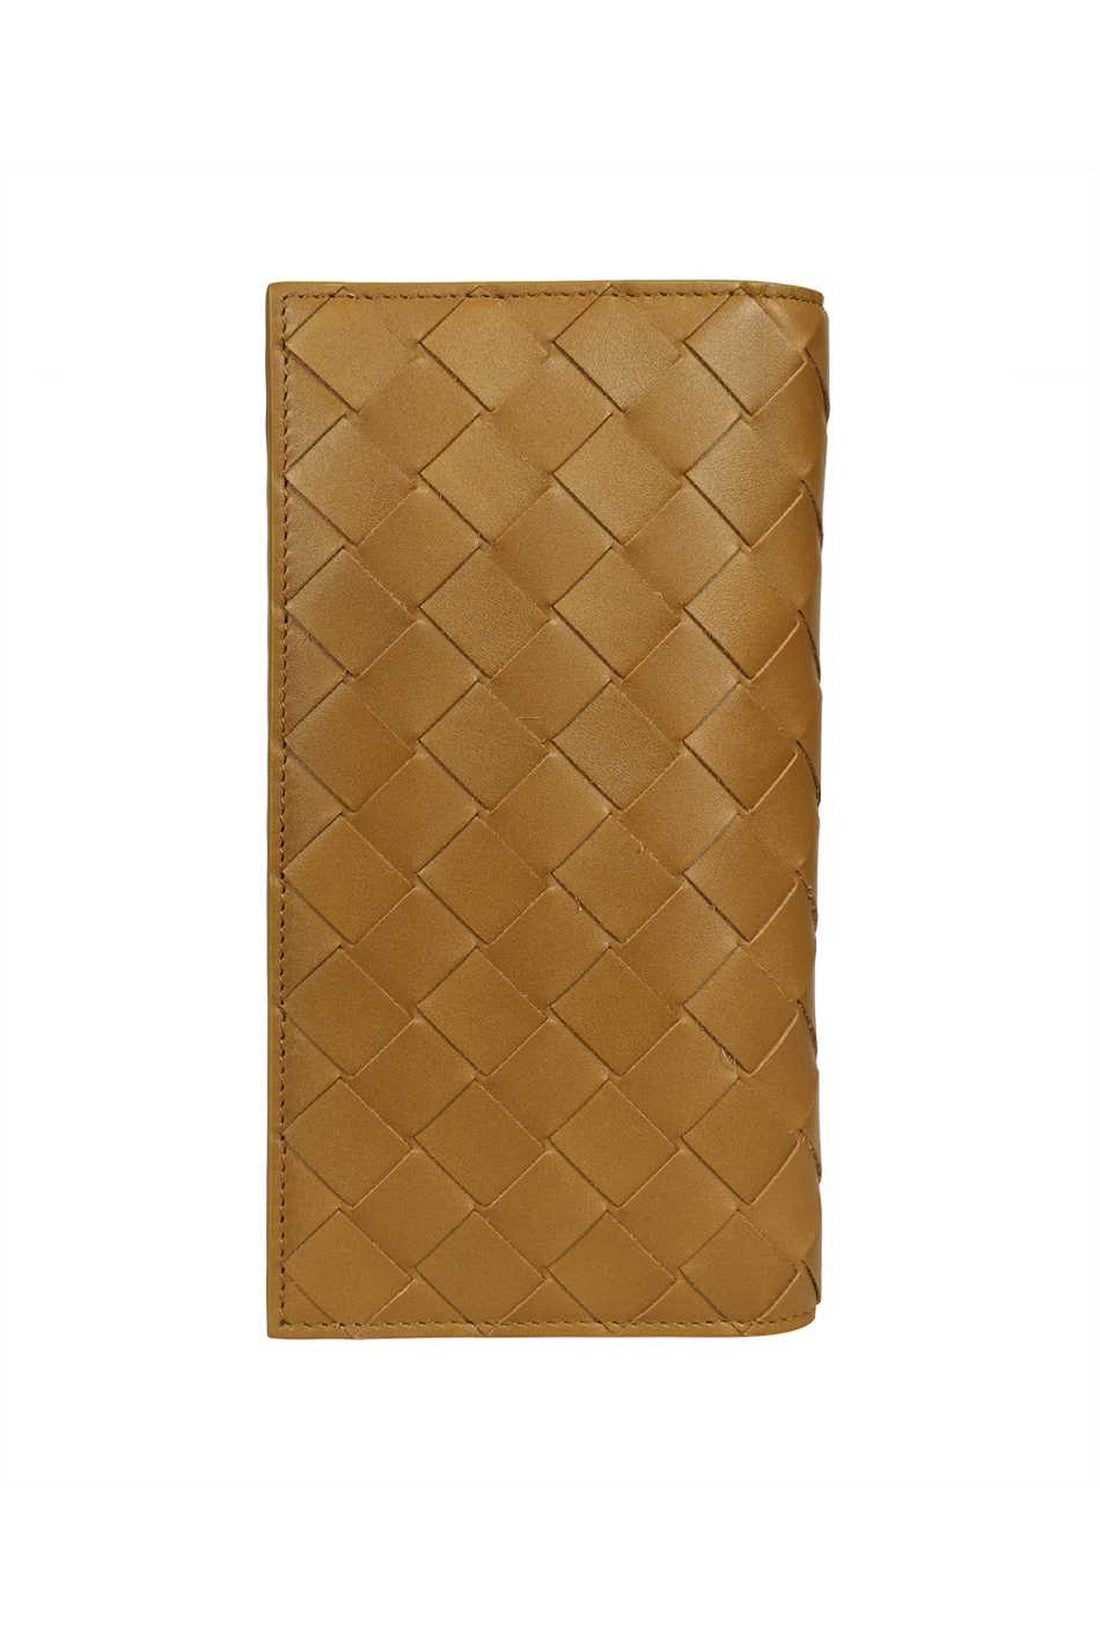 Bottega Veneta-OUTLET-SALE-Leather wallet-ARCHIVIST